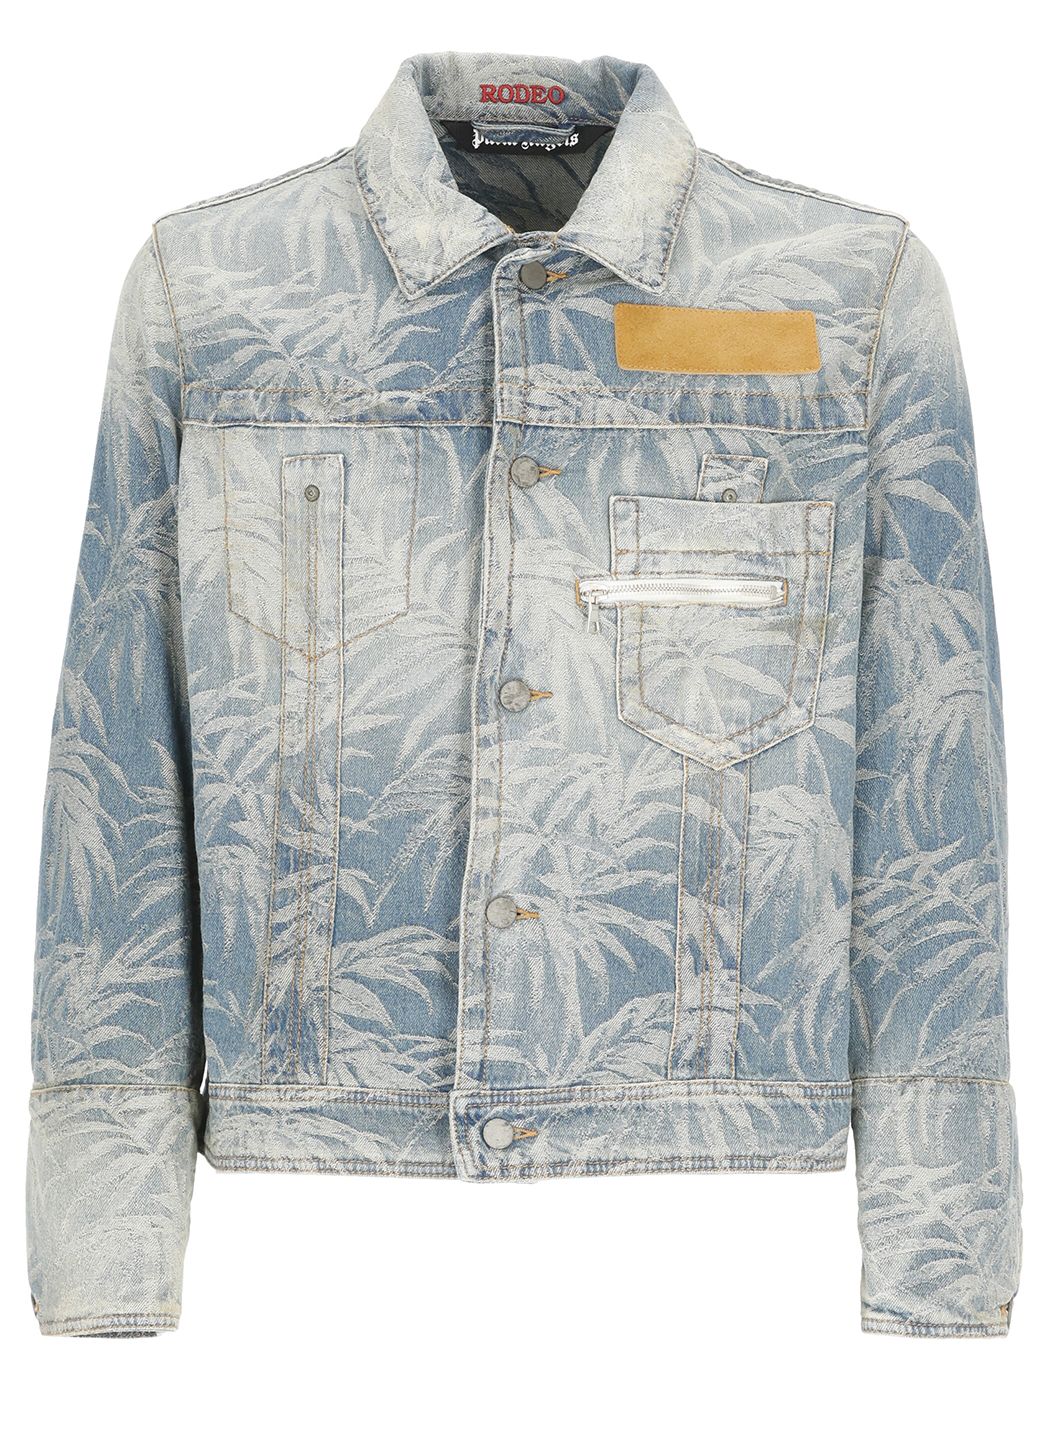 Jungle jacket